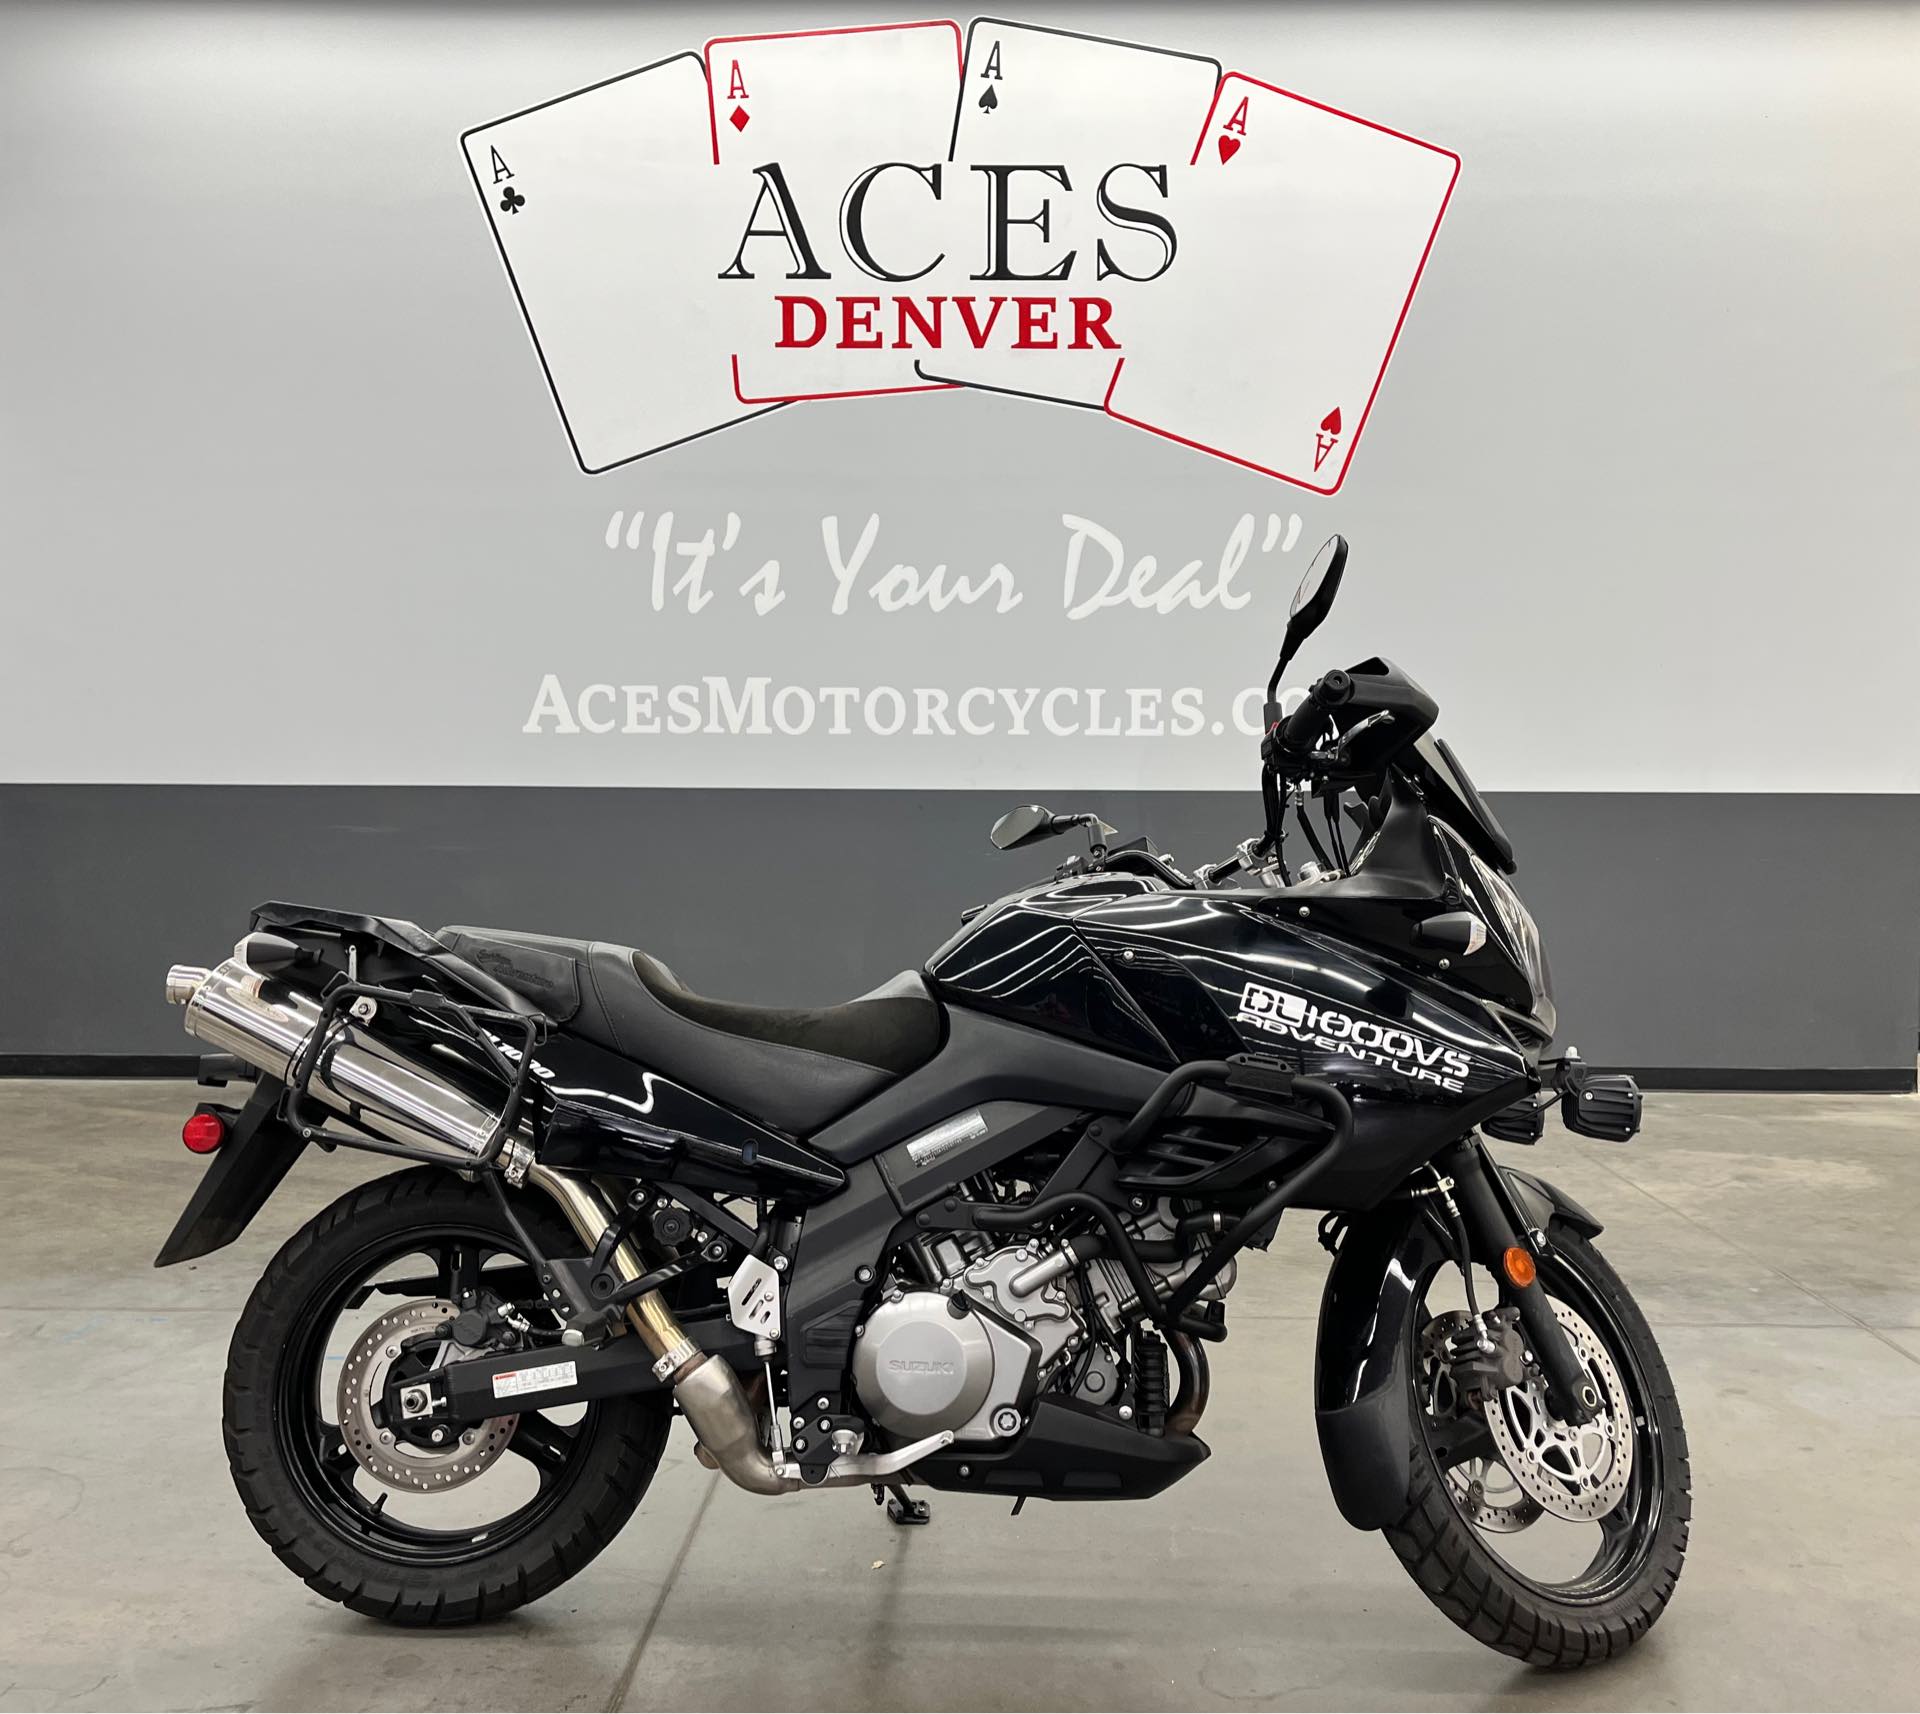 2012 Suzuki V-Strom 1000 Adventure at Aces Motorcycles - Denver